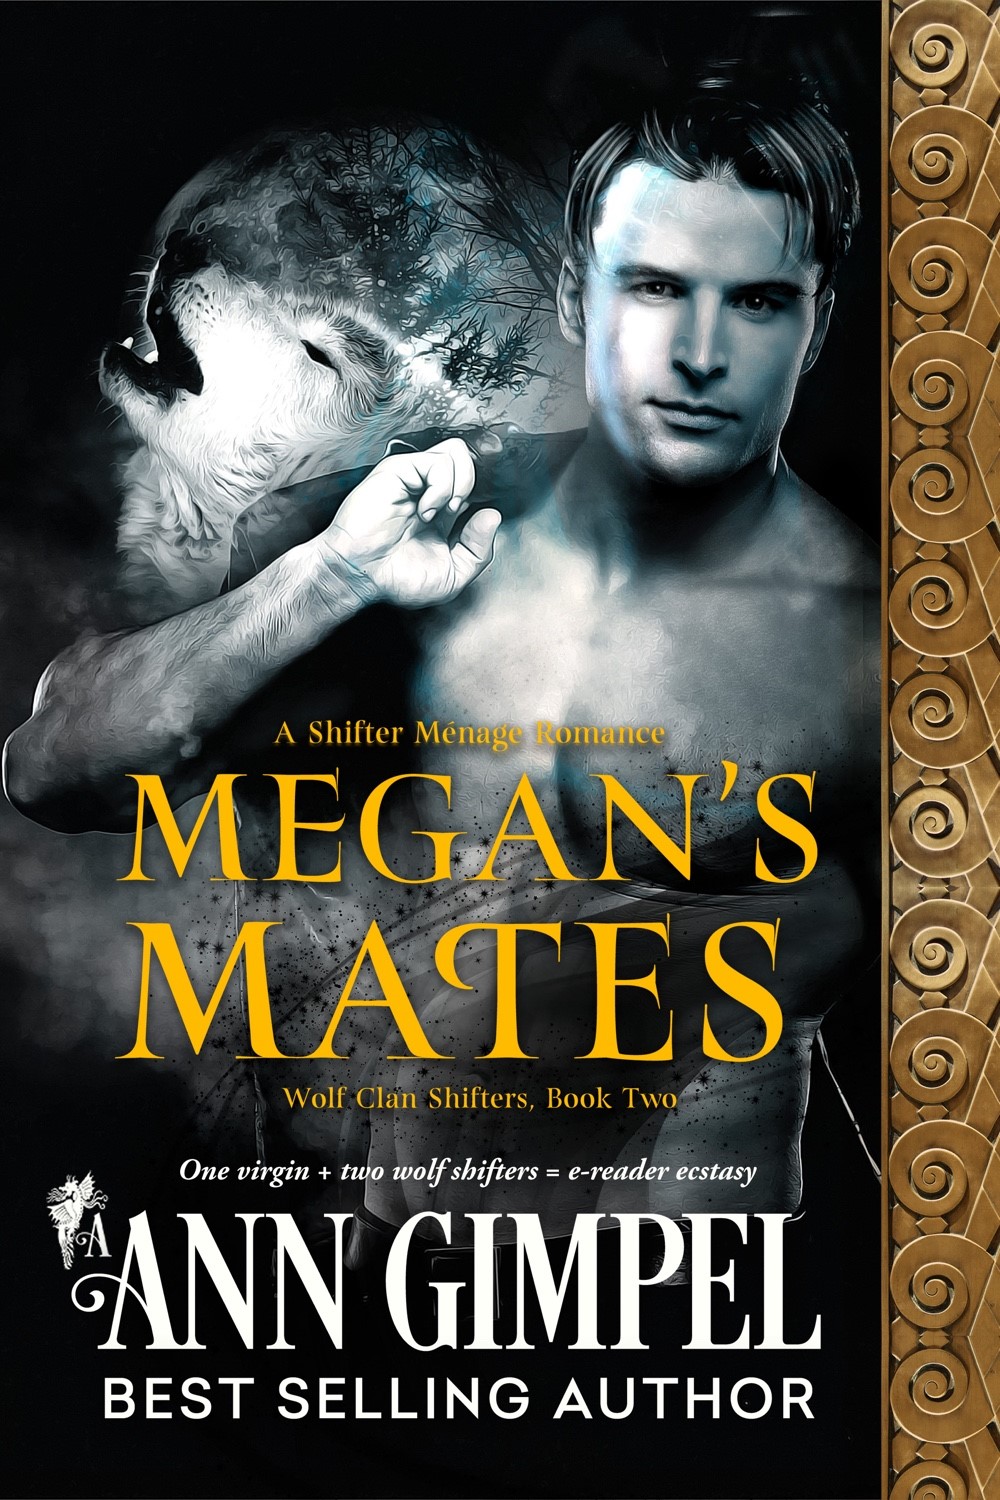 Megan’s Mates by Ann Gimpel